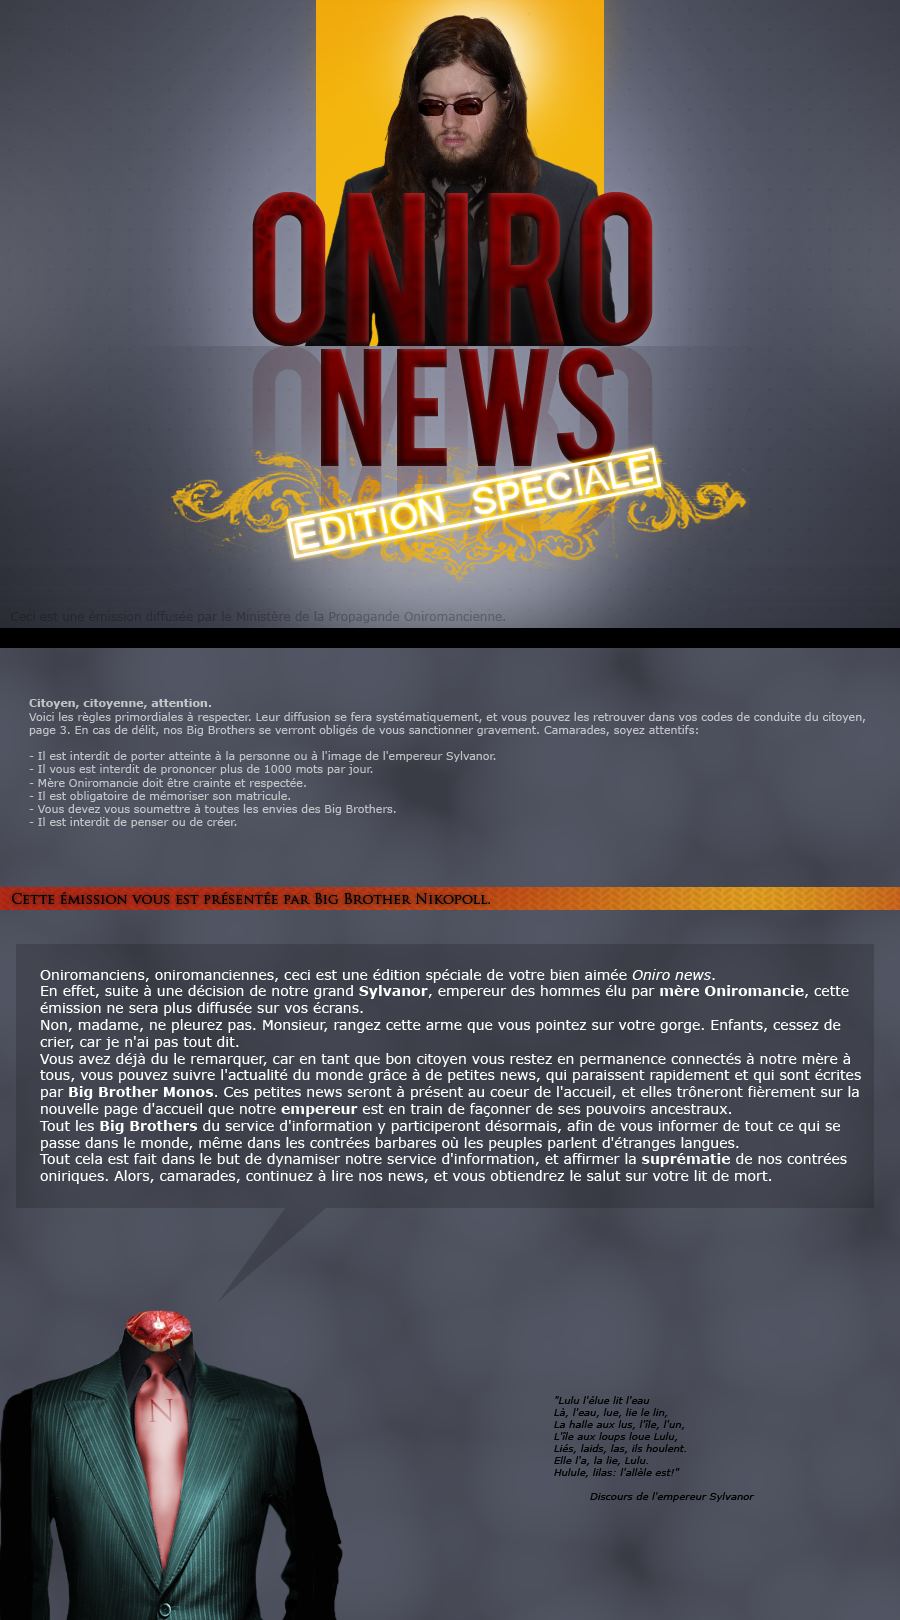 Oniro news: dition spciale